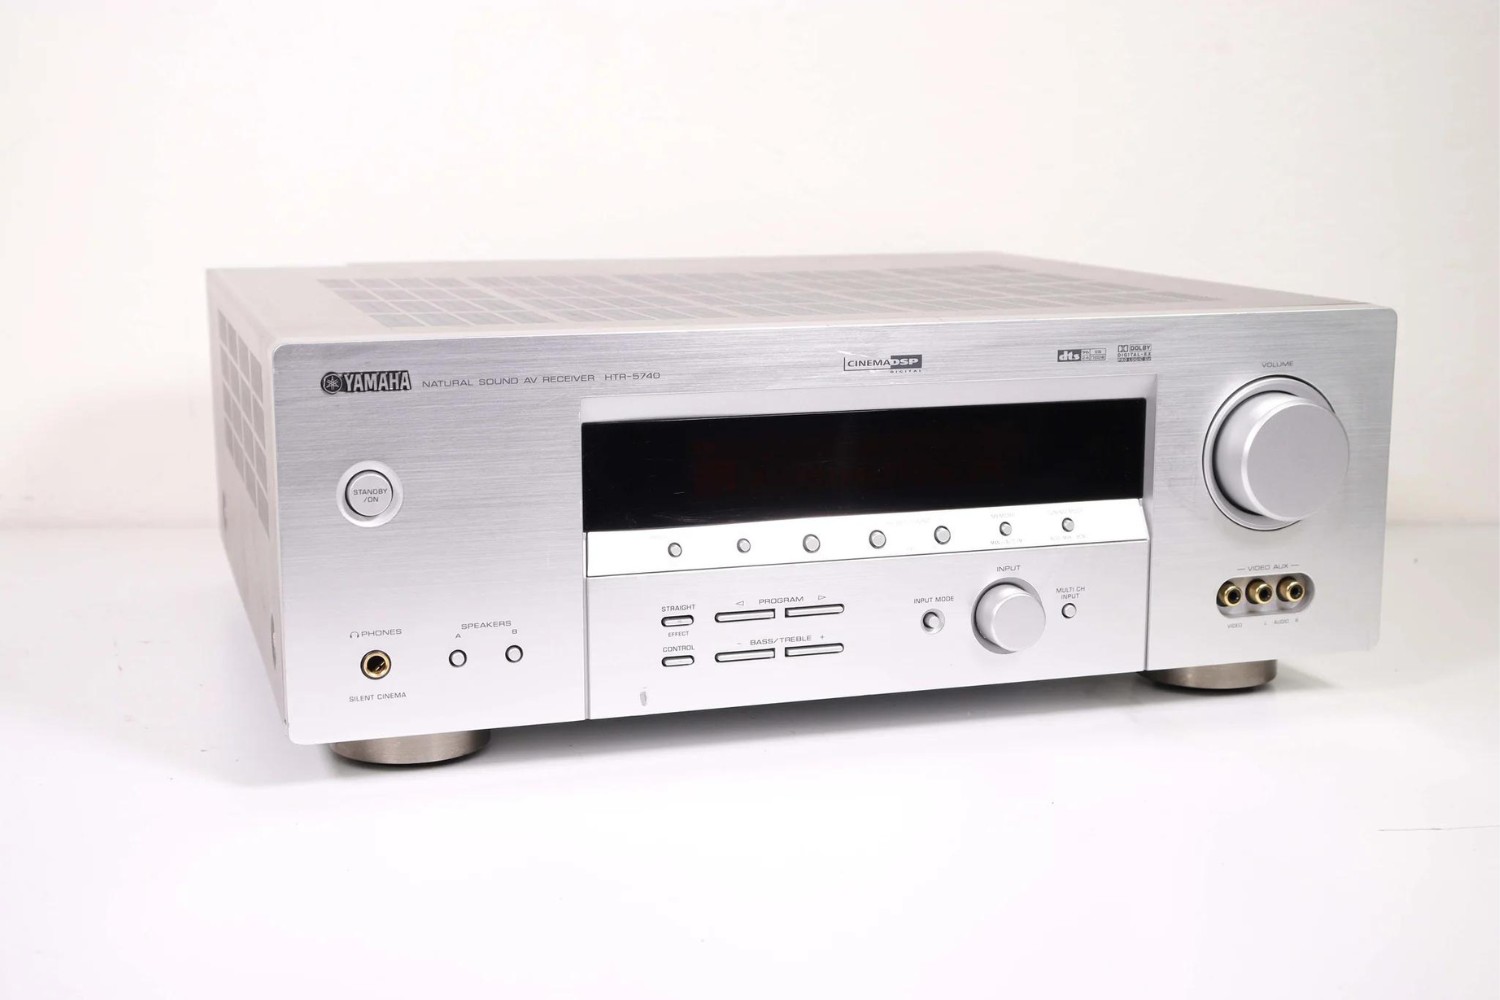 Yamaha Natural Sound AV Receiver HTR-5840: How To Set Up